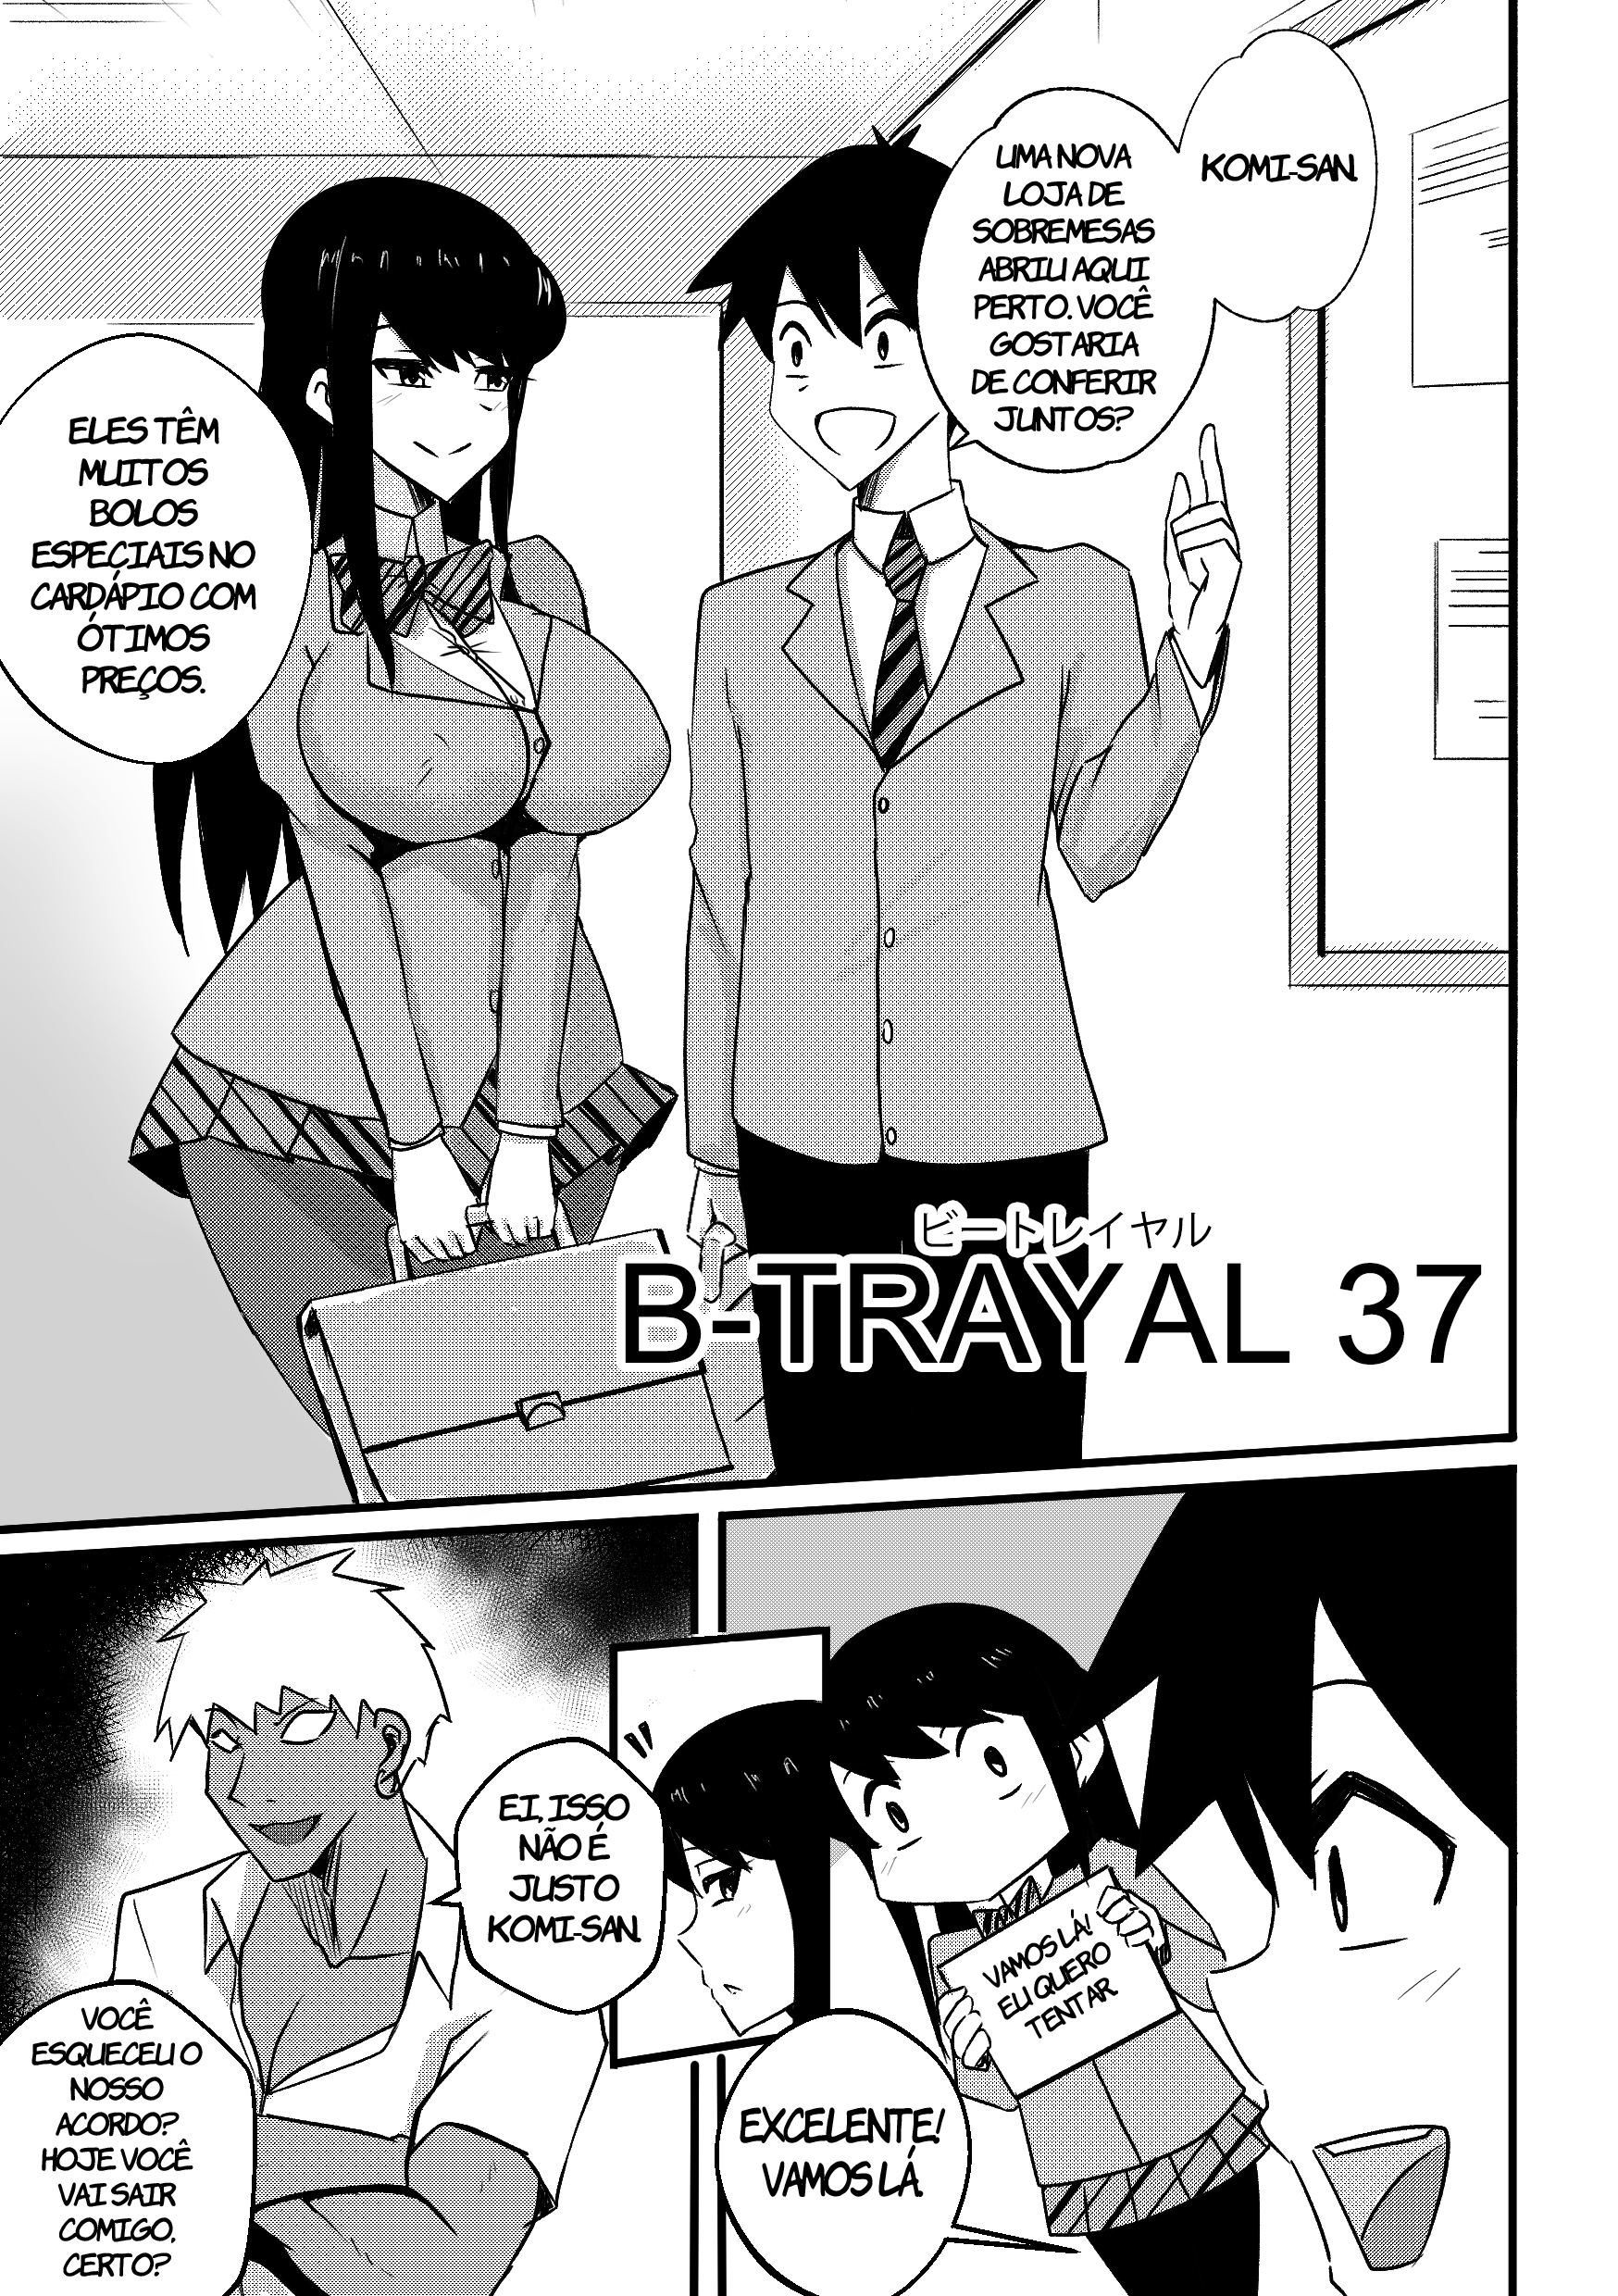 B-Trayal 37